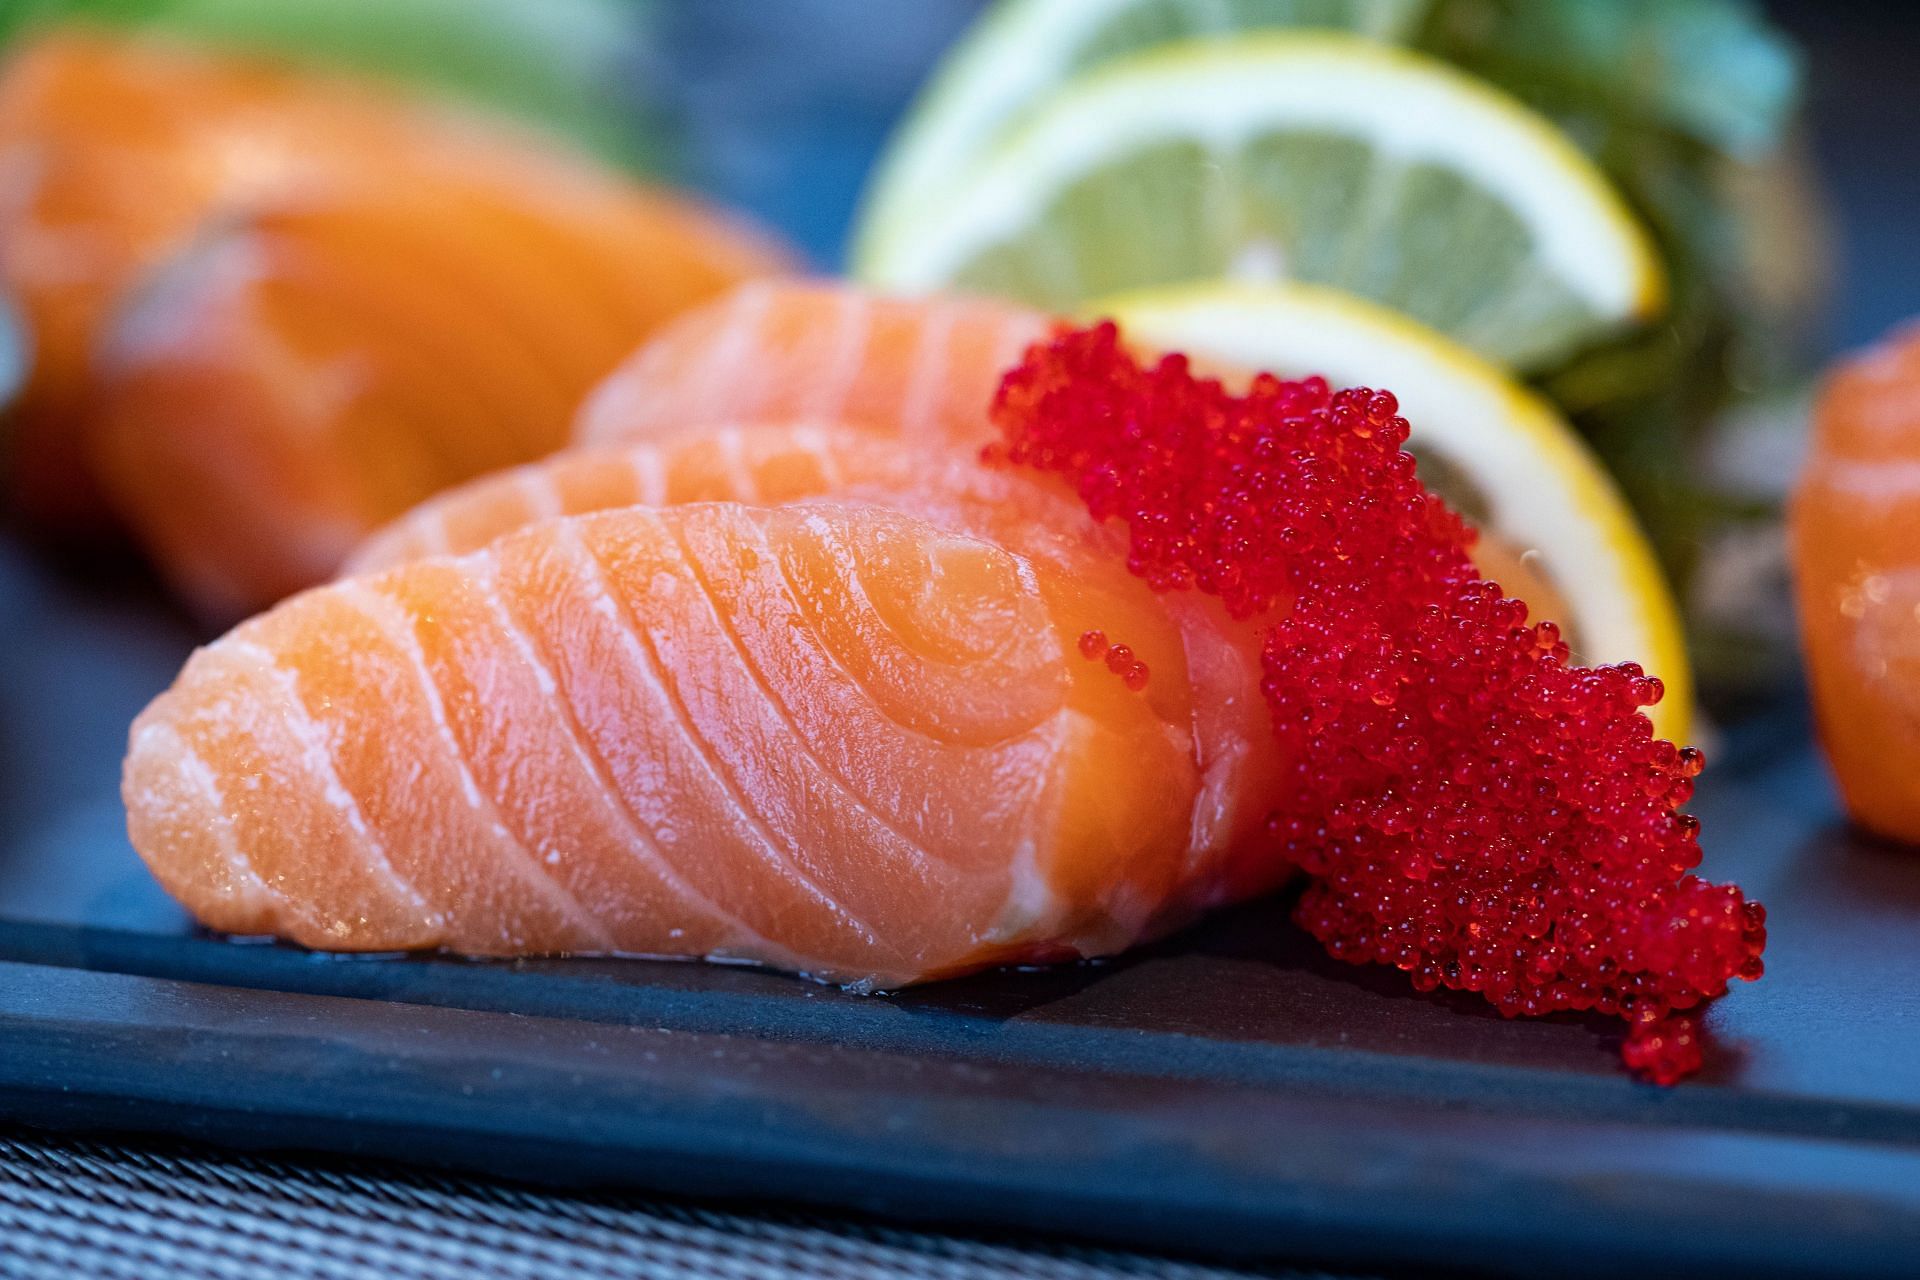 Salmon is rich in vitamin D. (Image via Pexels)